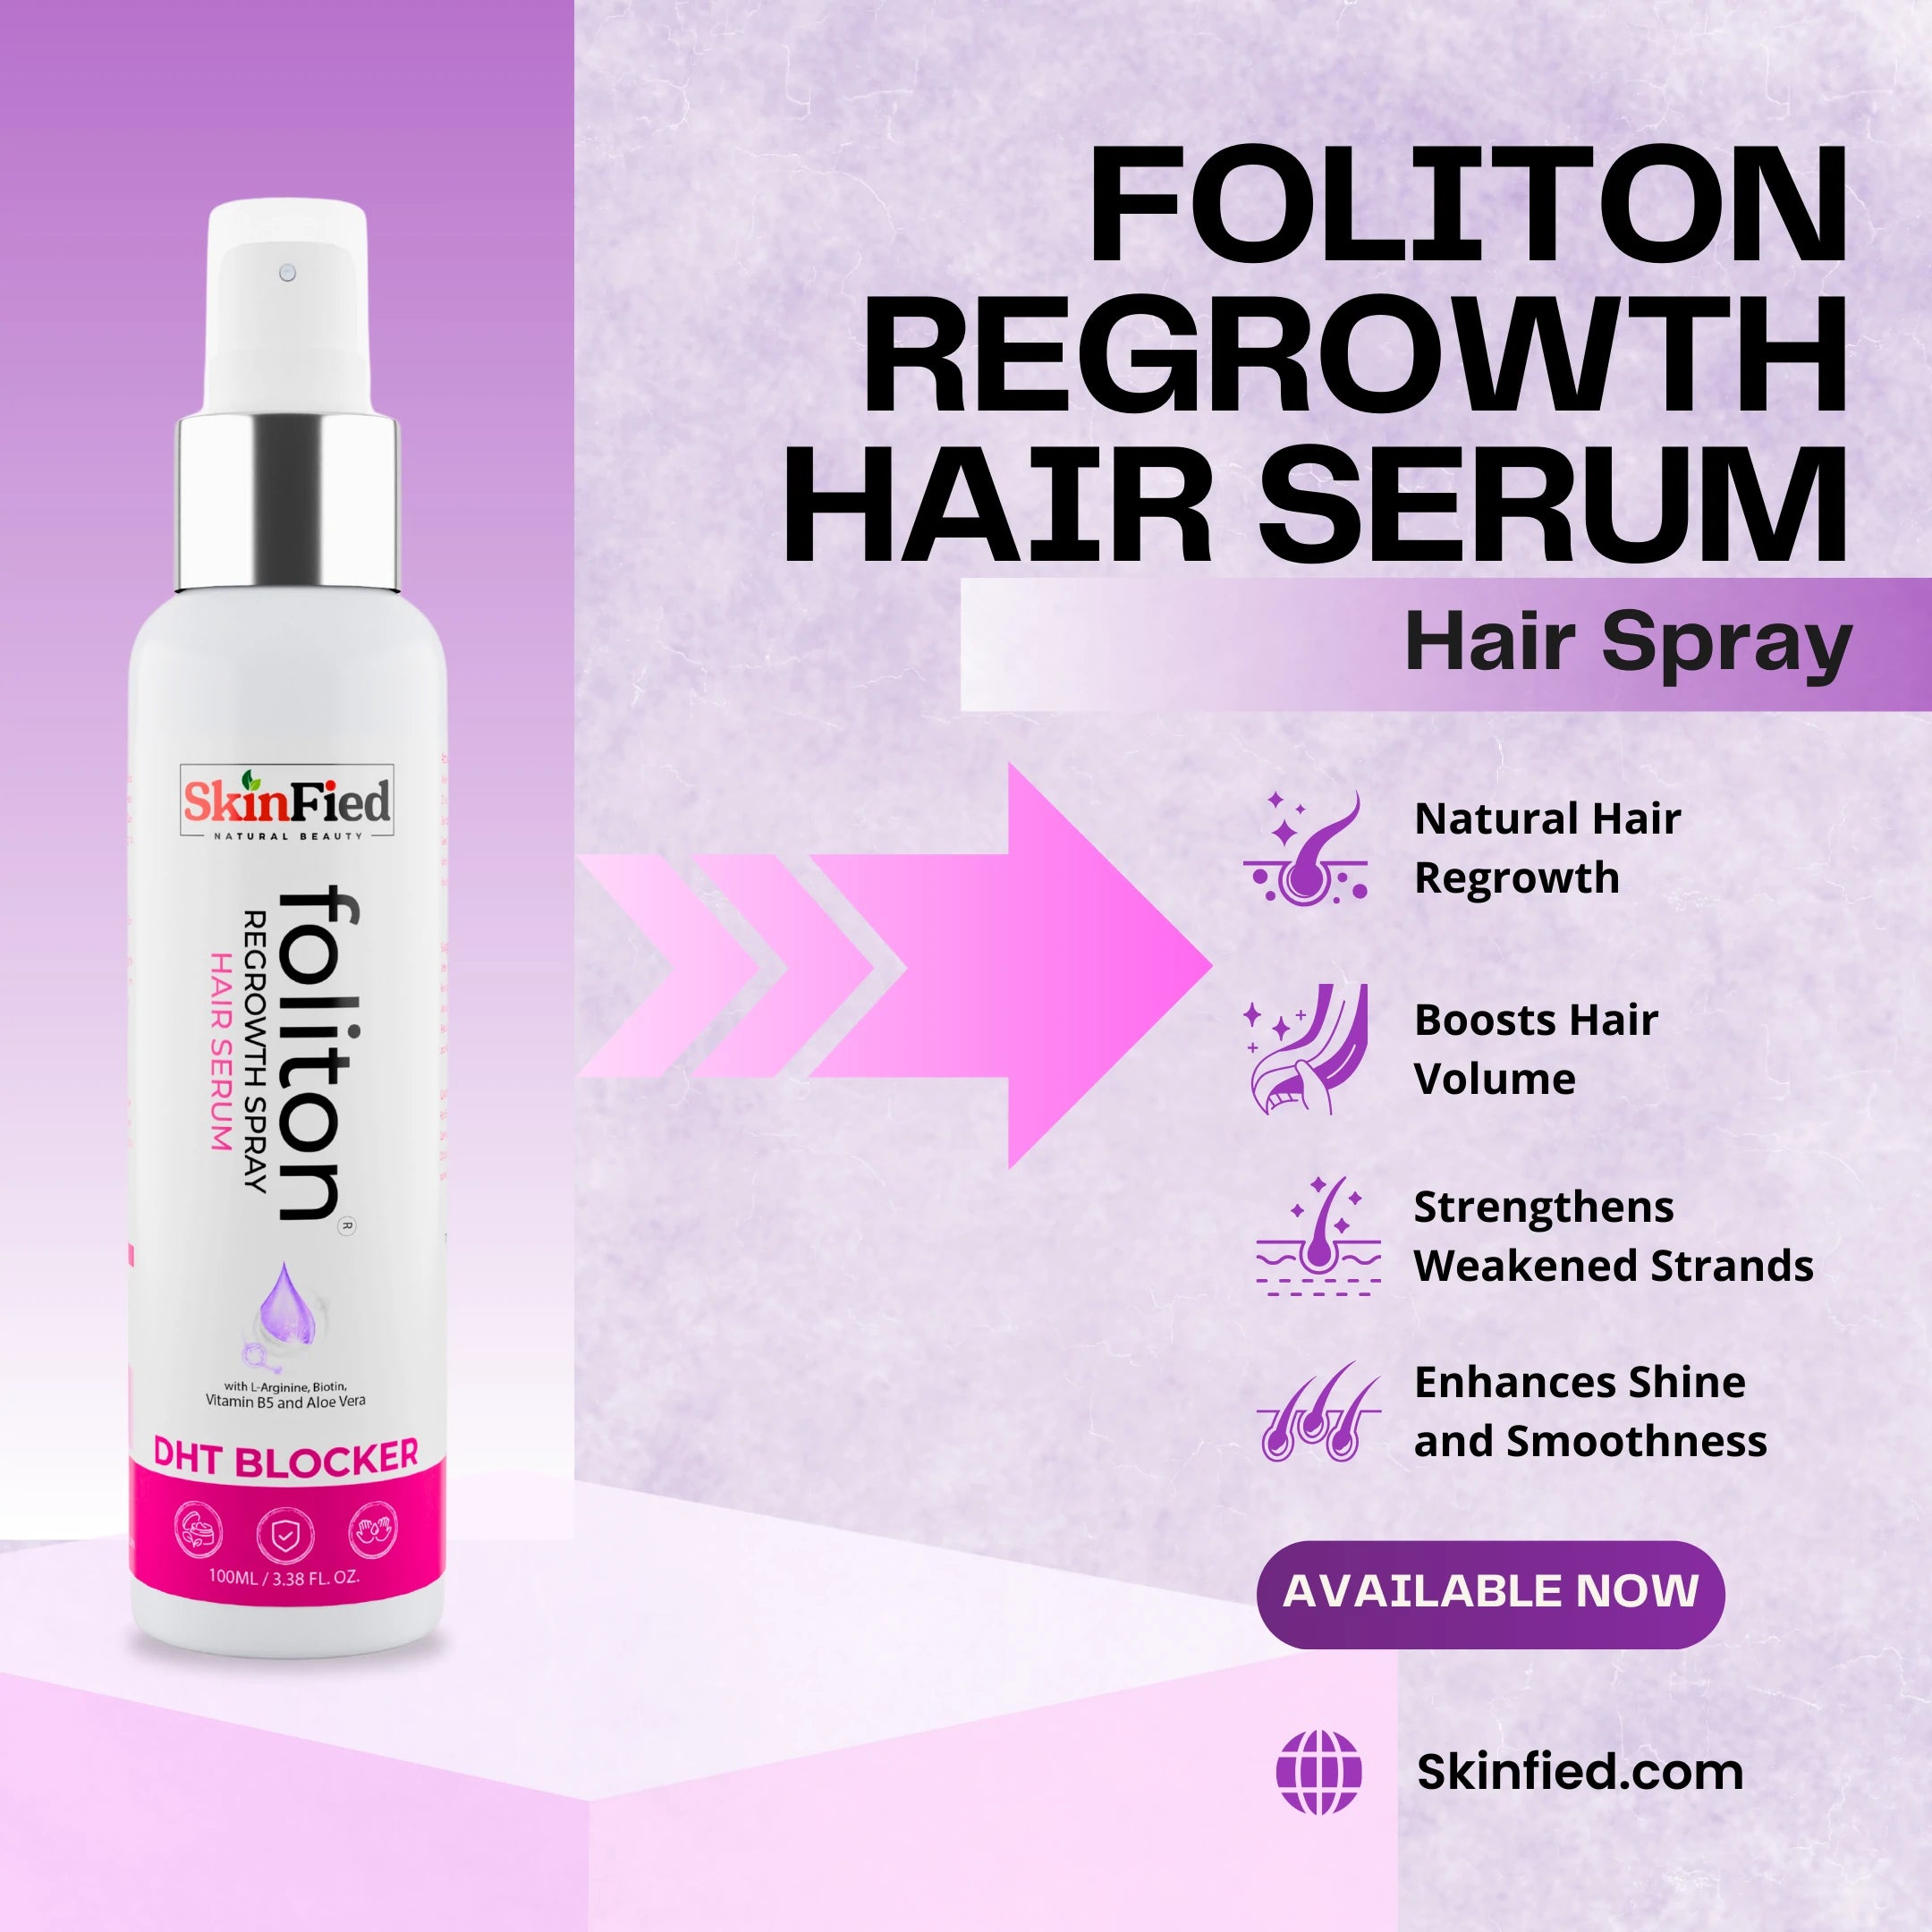 Foliton Regrowth Spray Hair Serum With L-arginine, Biotin, Aloe Vera, and Vitamin B5